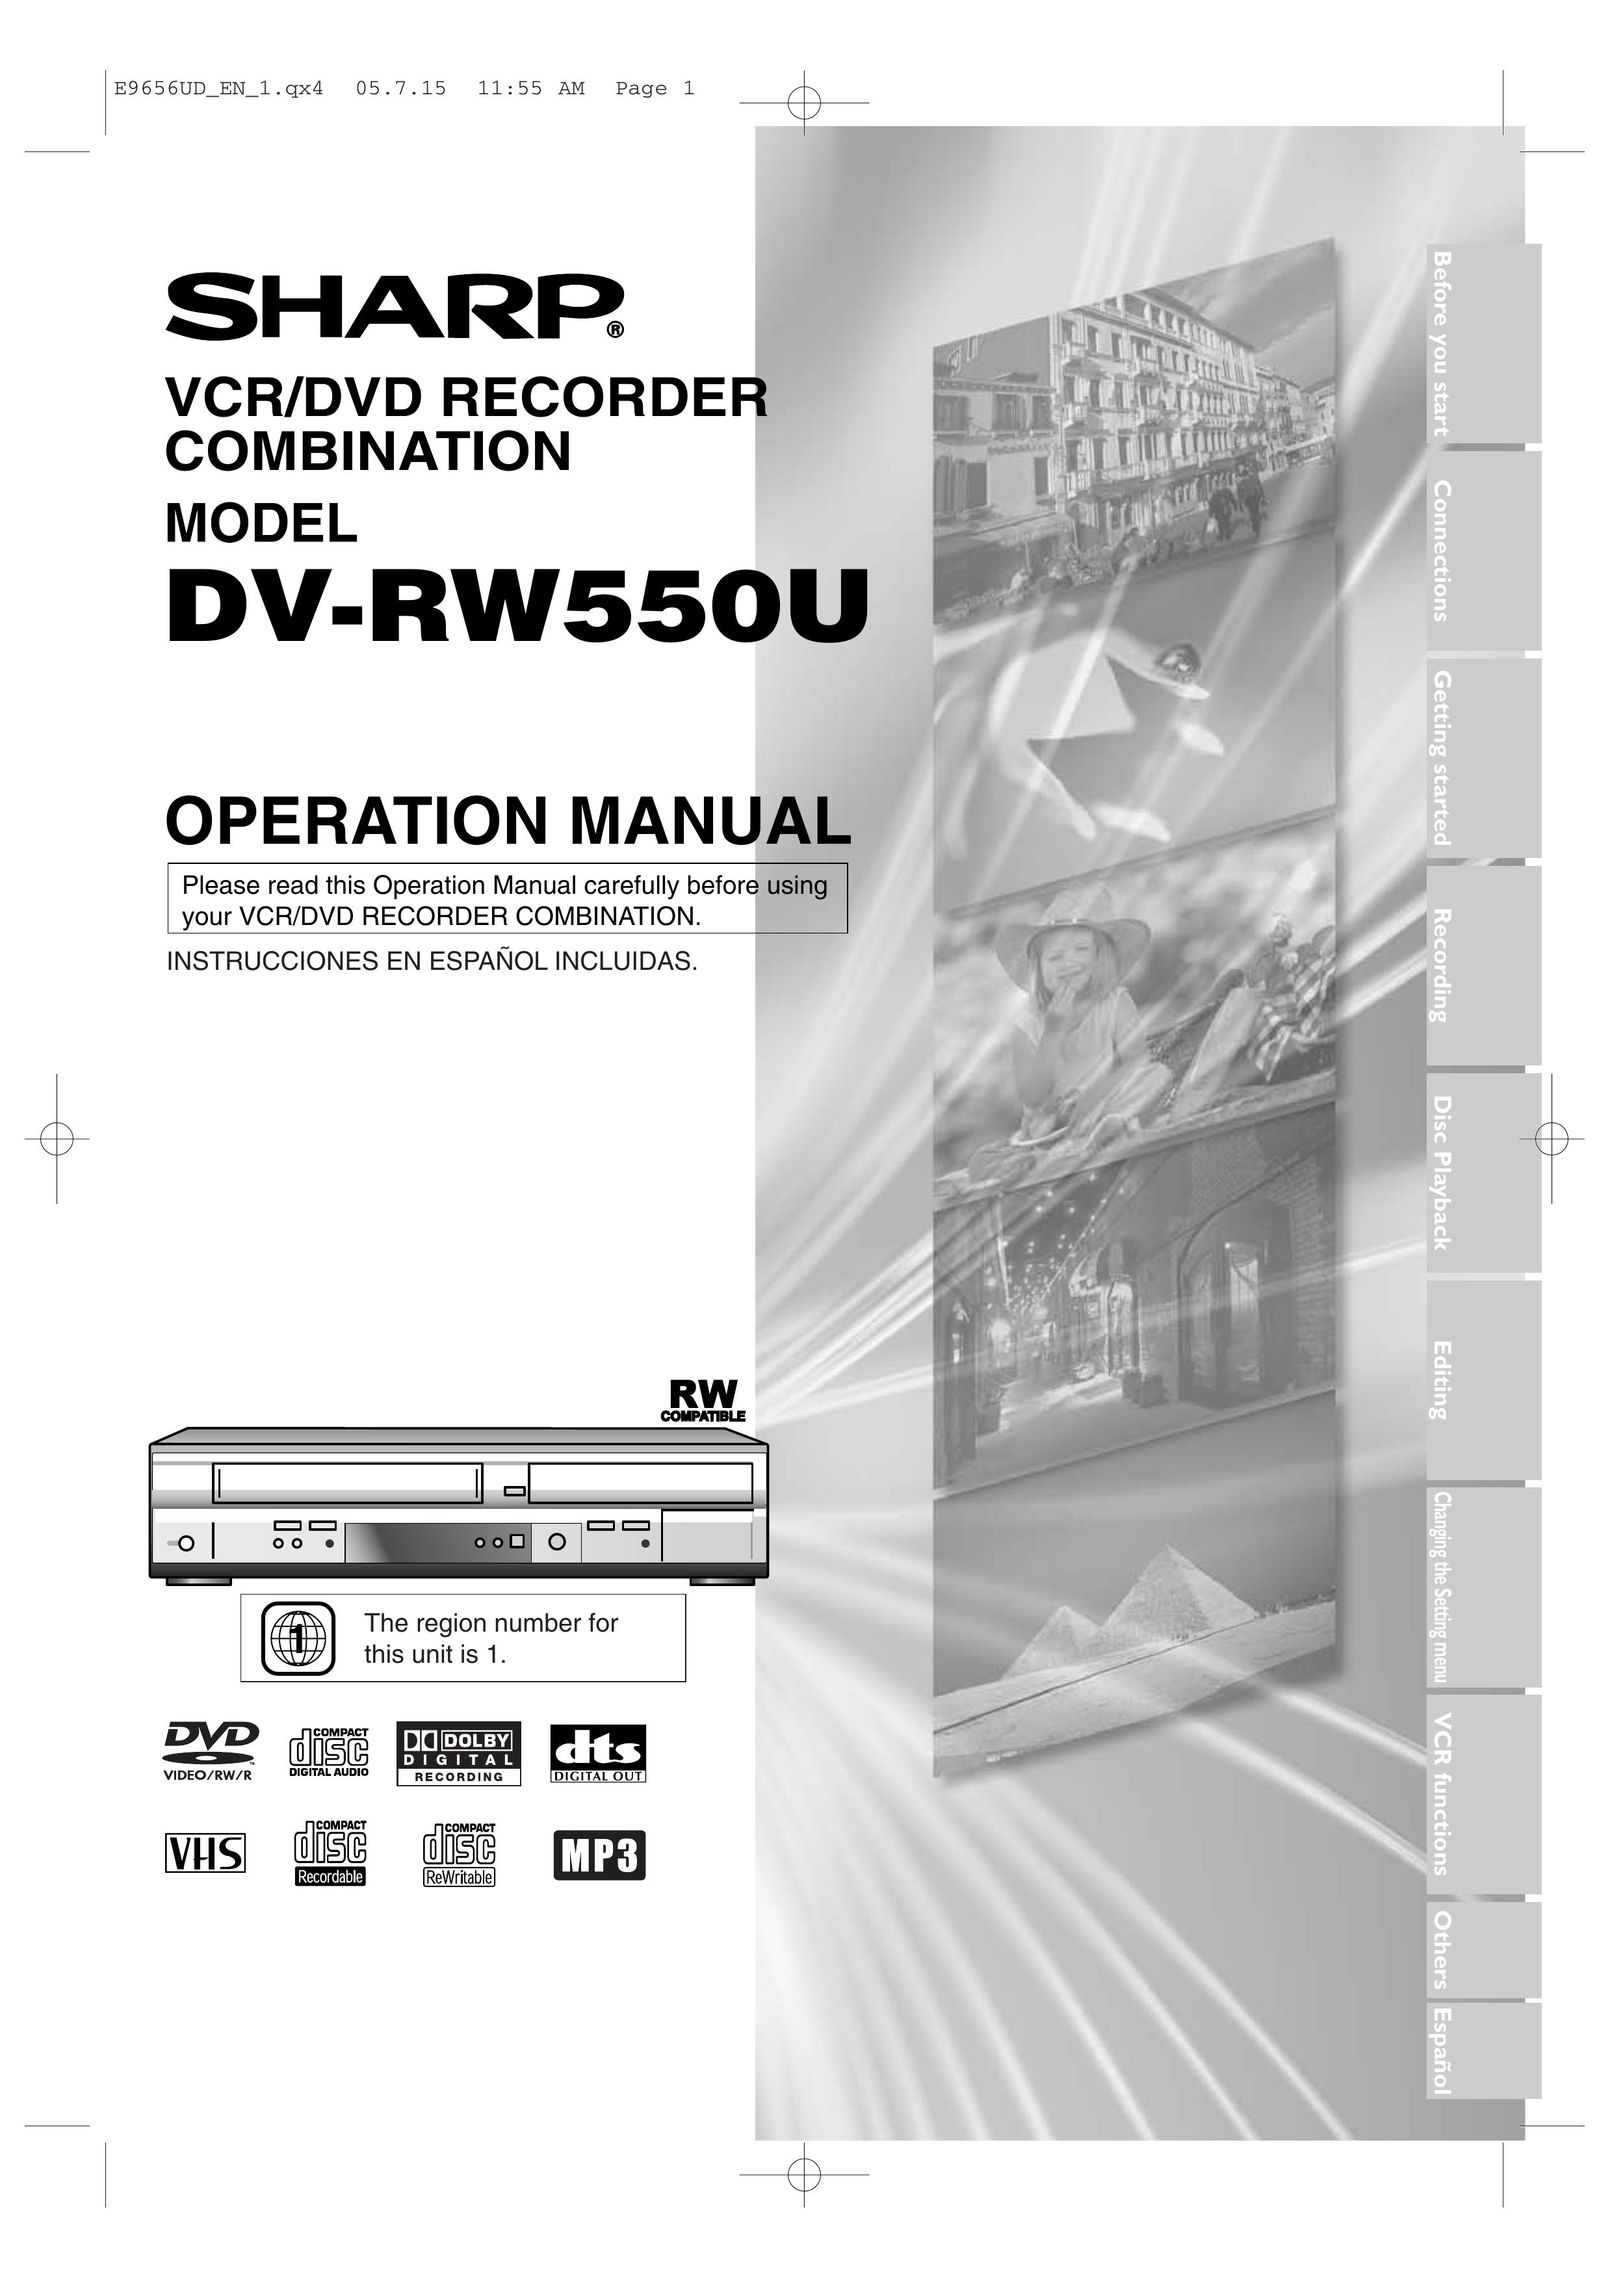 Sharp DV-RW550U DVD VCR Combo User Manual